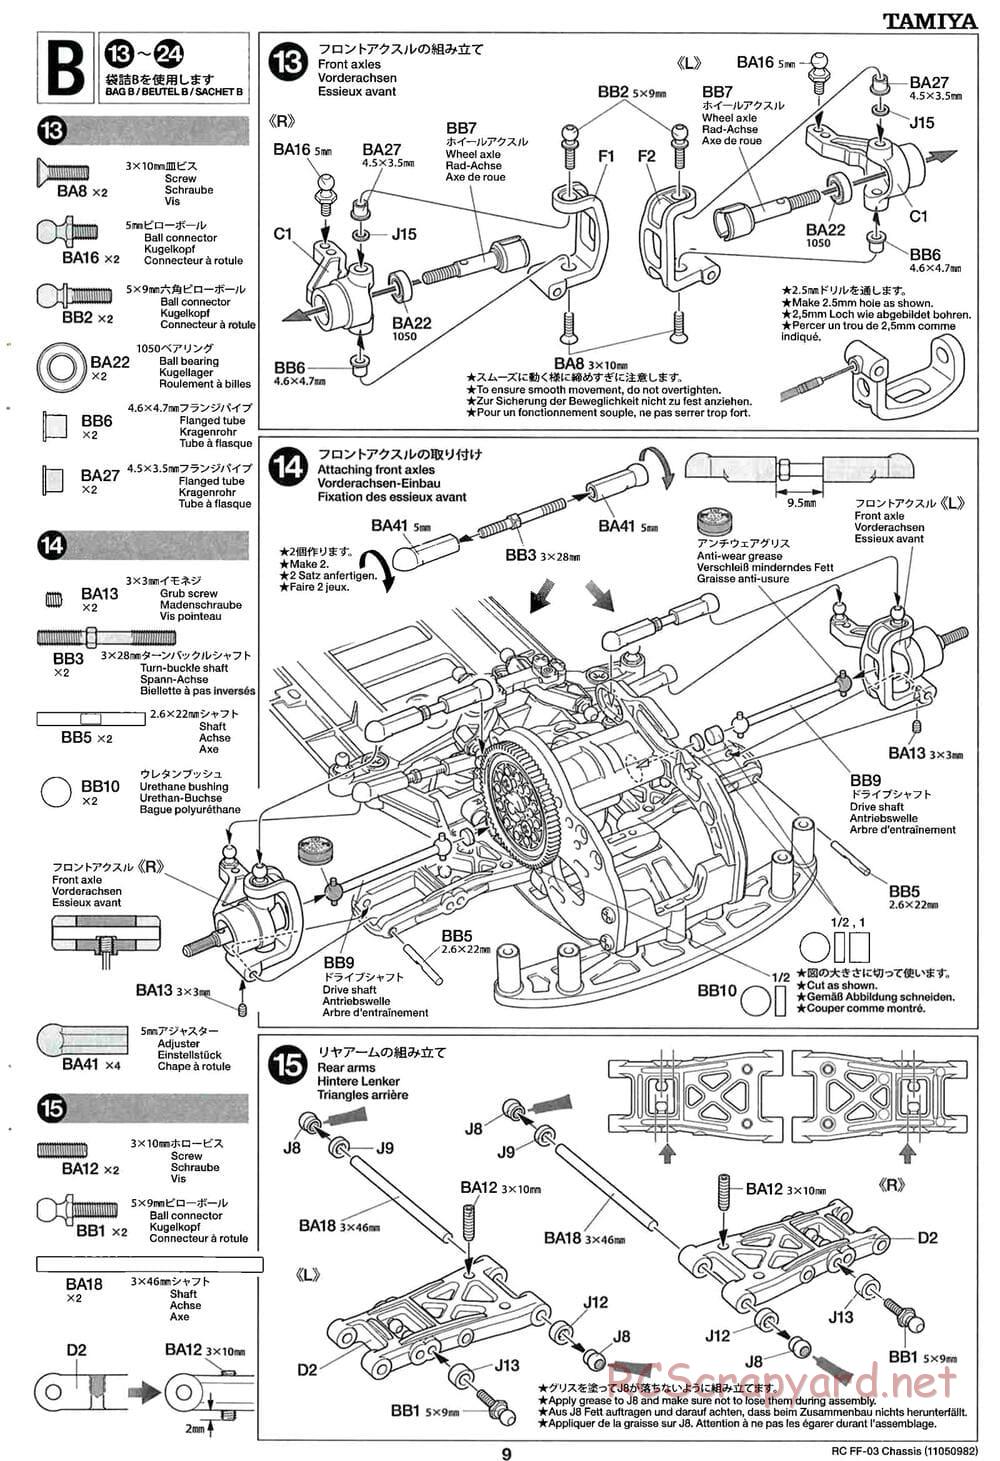 Tamiya - FF-03 Chassis - Manual - Page 9